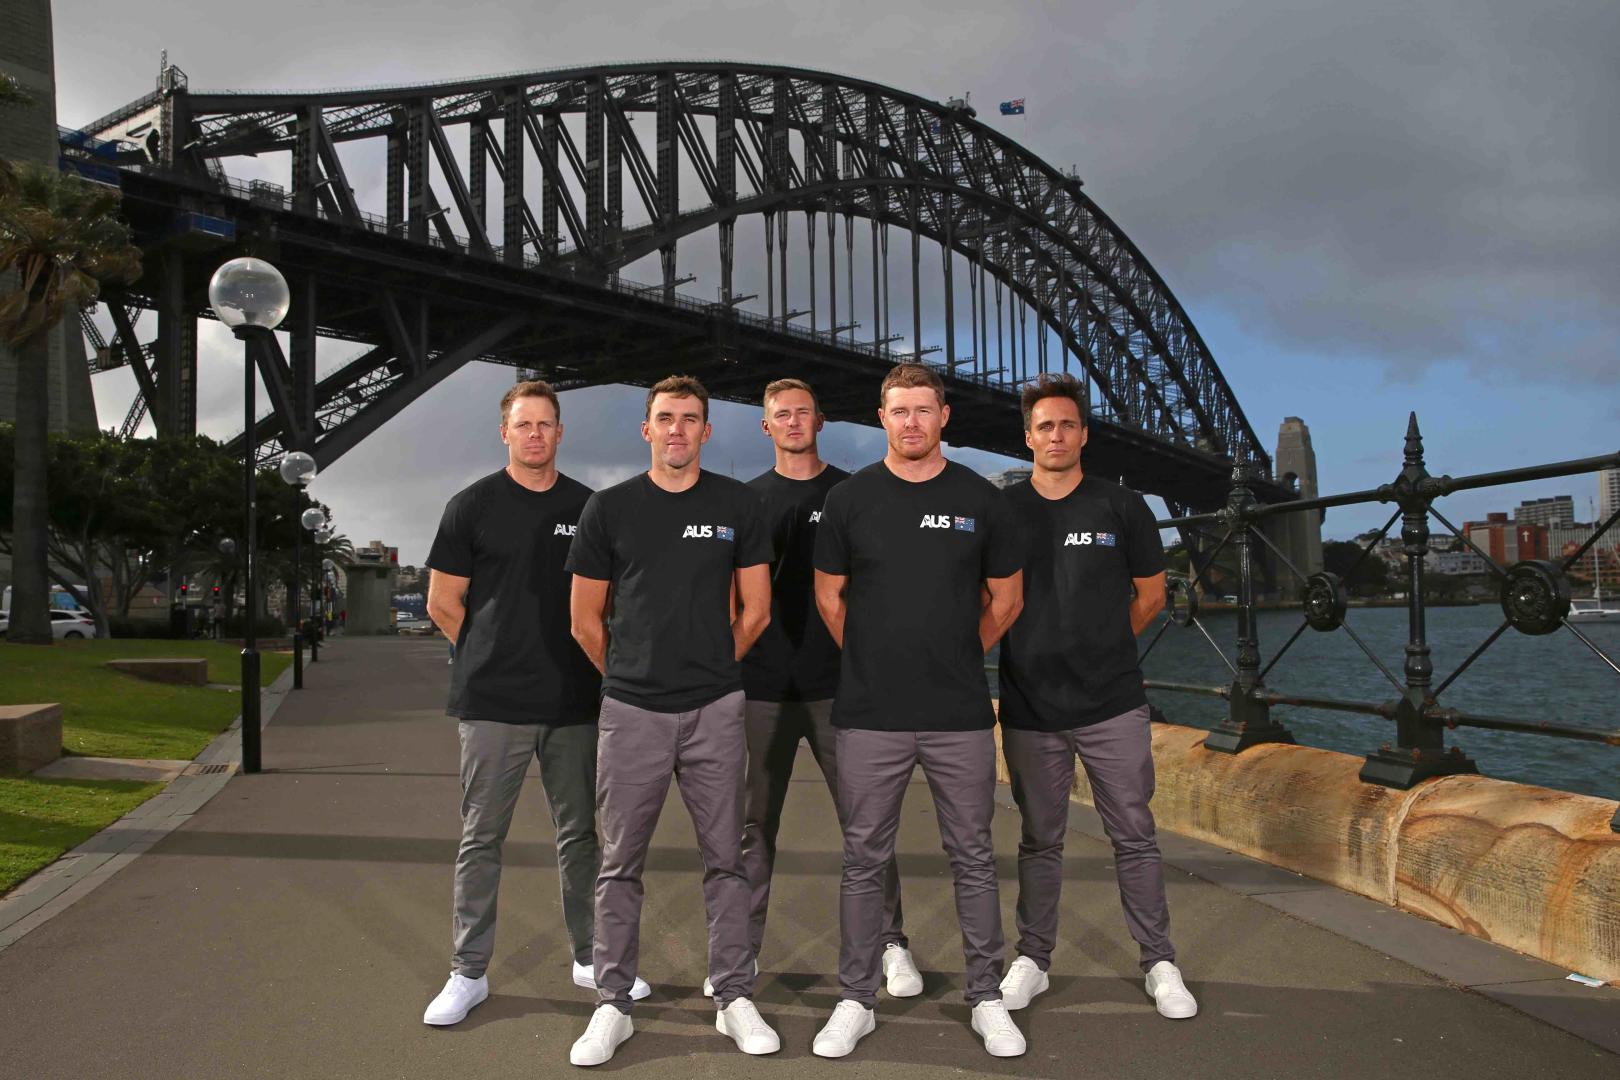 The Australia SailGP Team from L to R: Sam Newton, Jason Waterhouse, Kyle Langford, Tom Slingsby & Ky Hurst